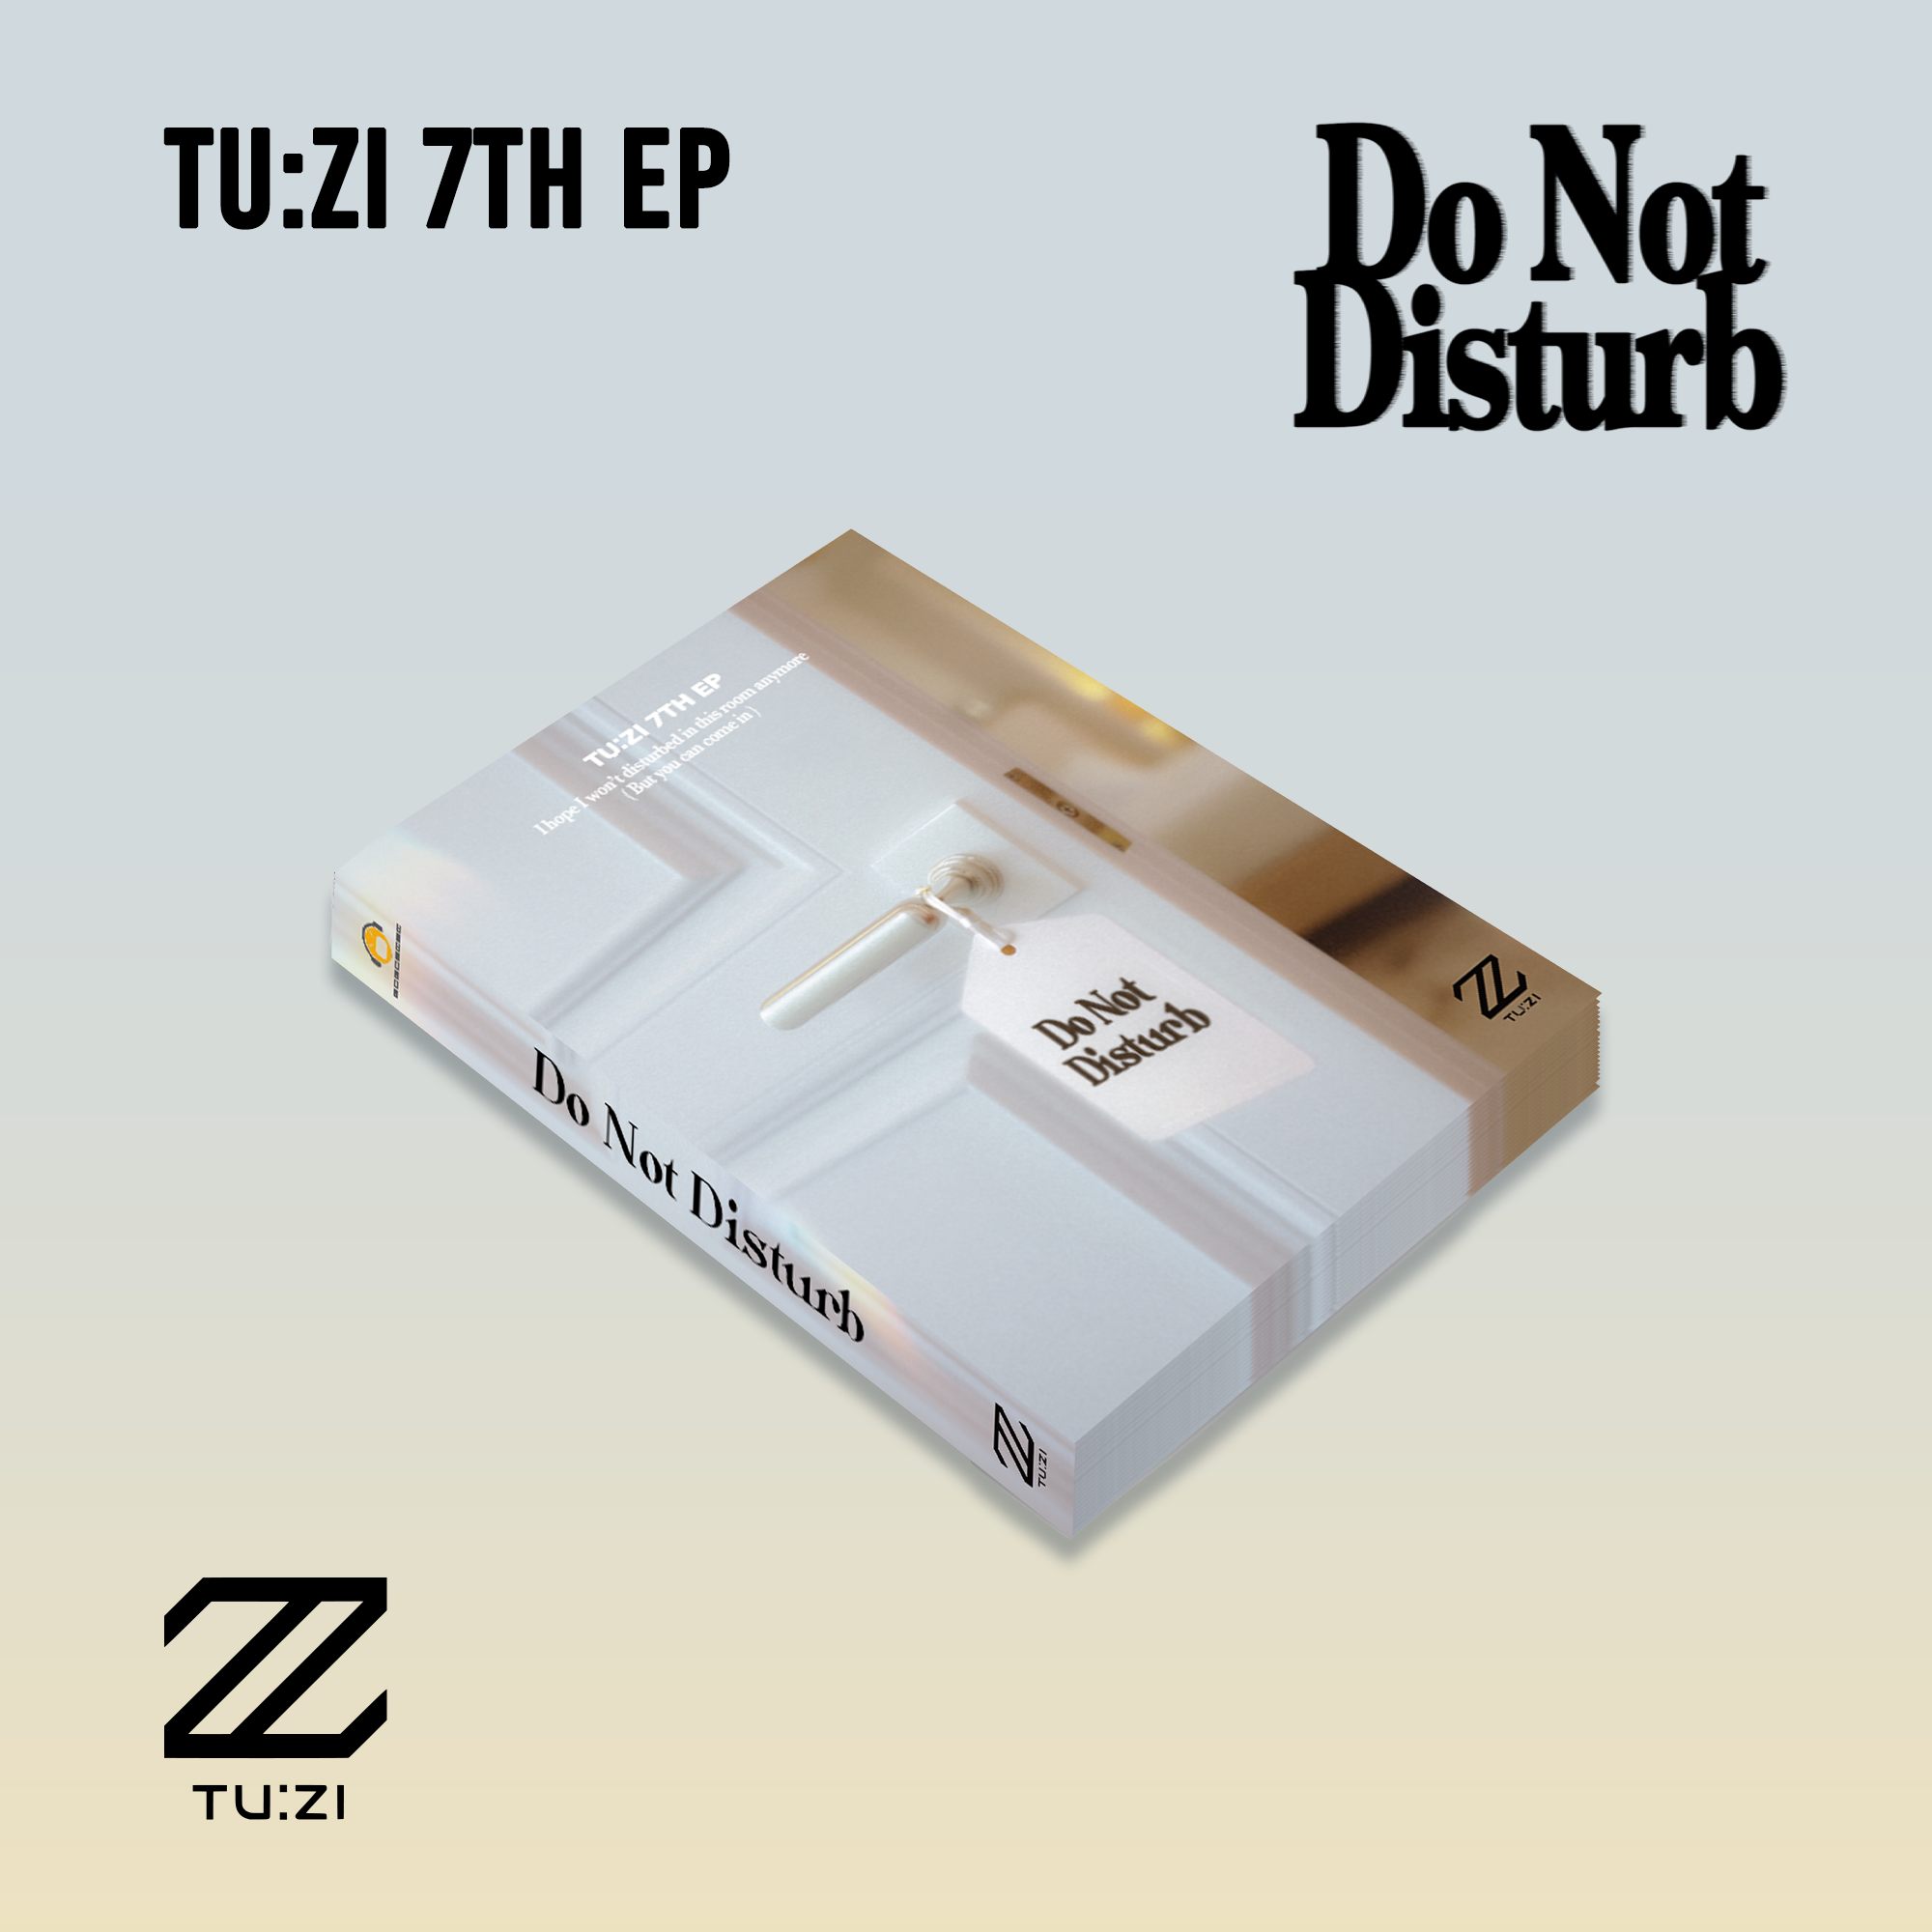 TU:ZI - DO NOT DISTURB